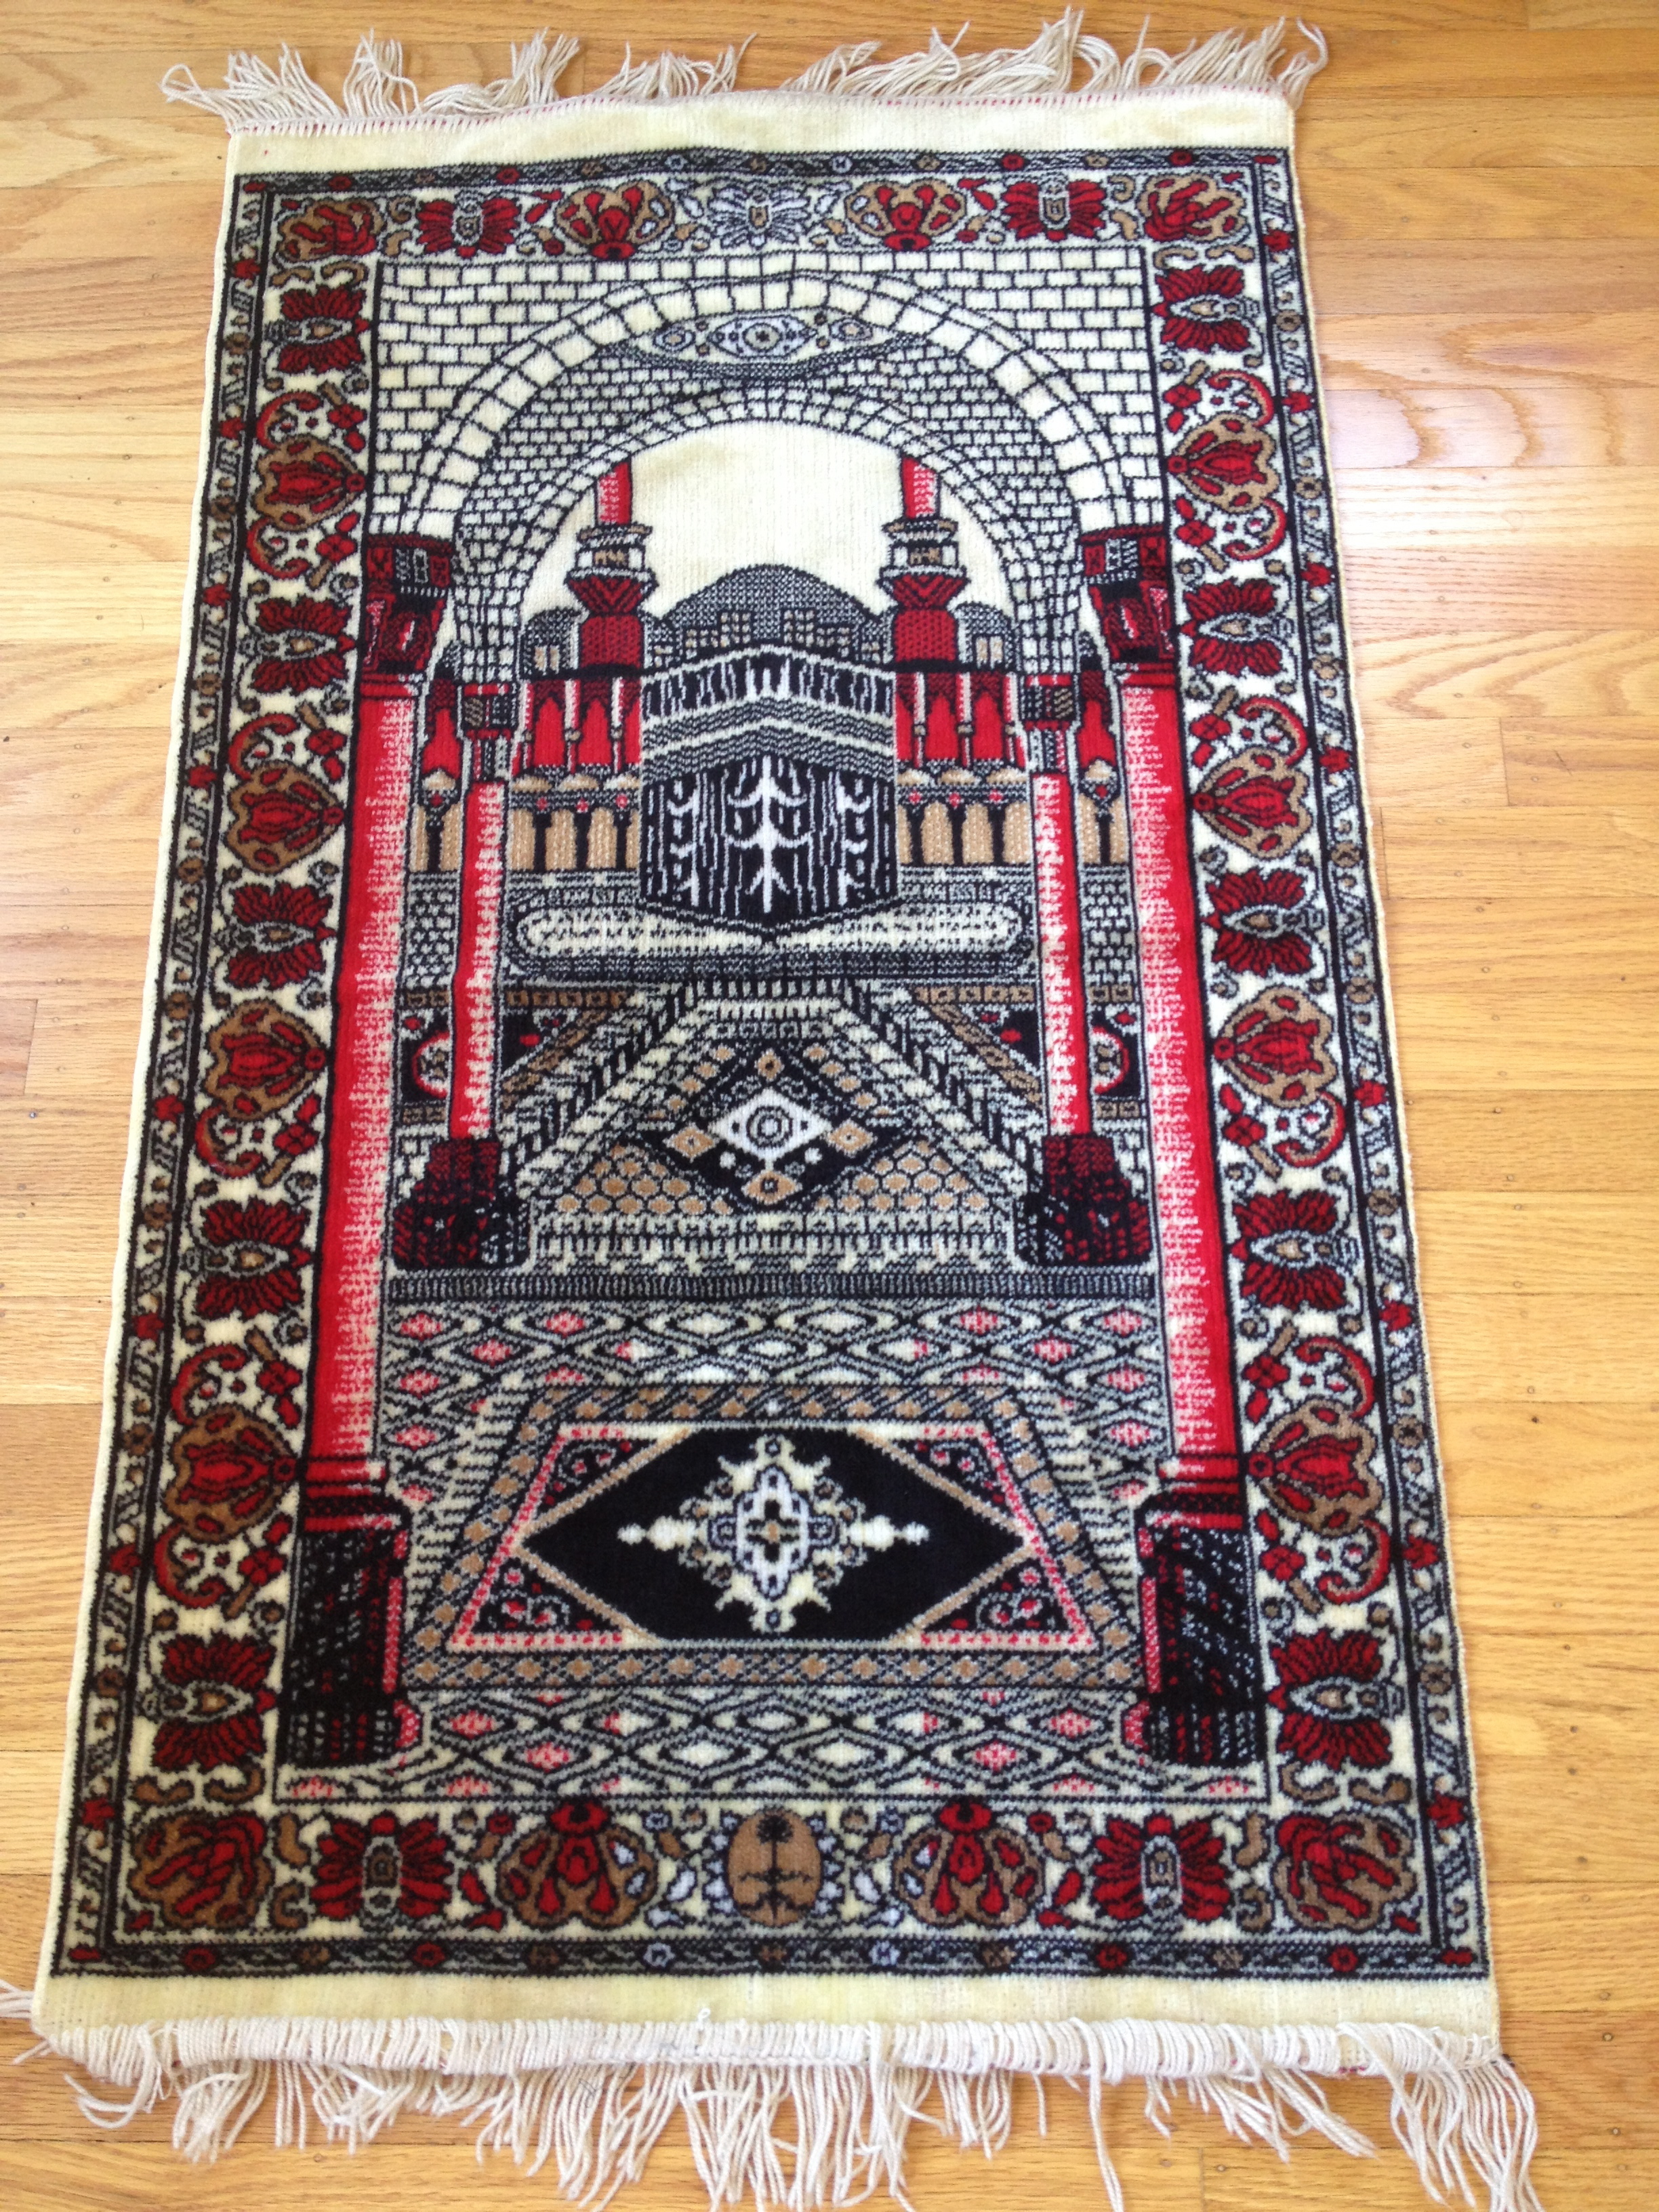 Praying through the senses: The Prayer Rug/Carpet and the Converging